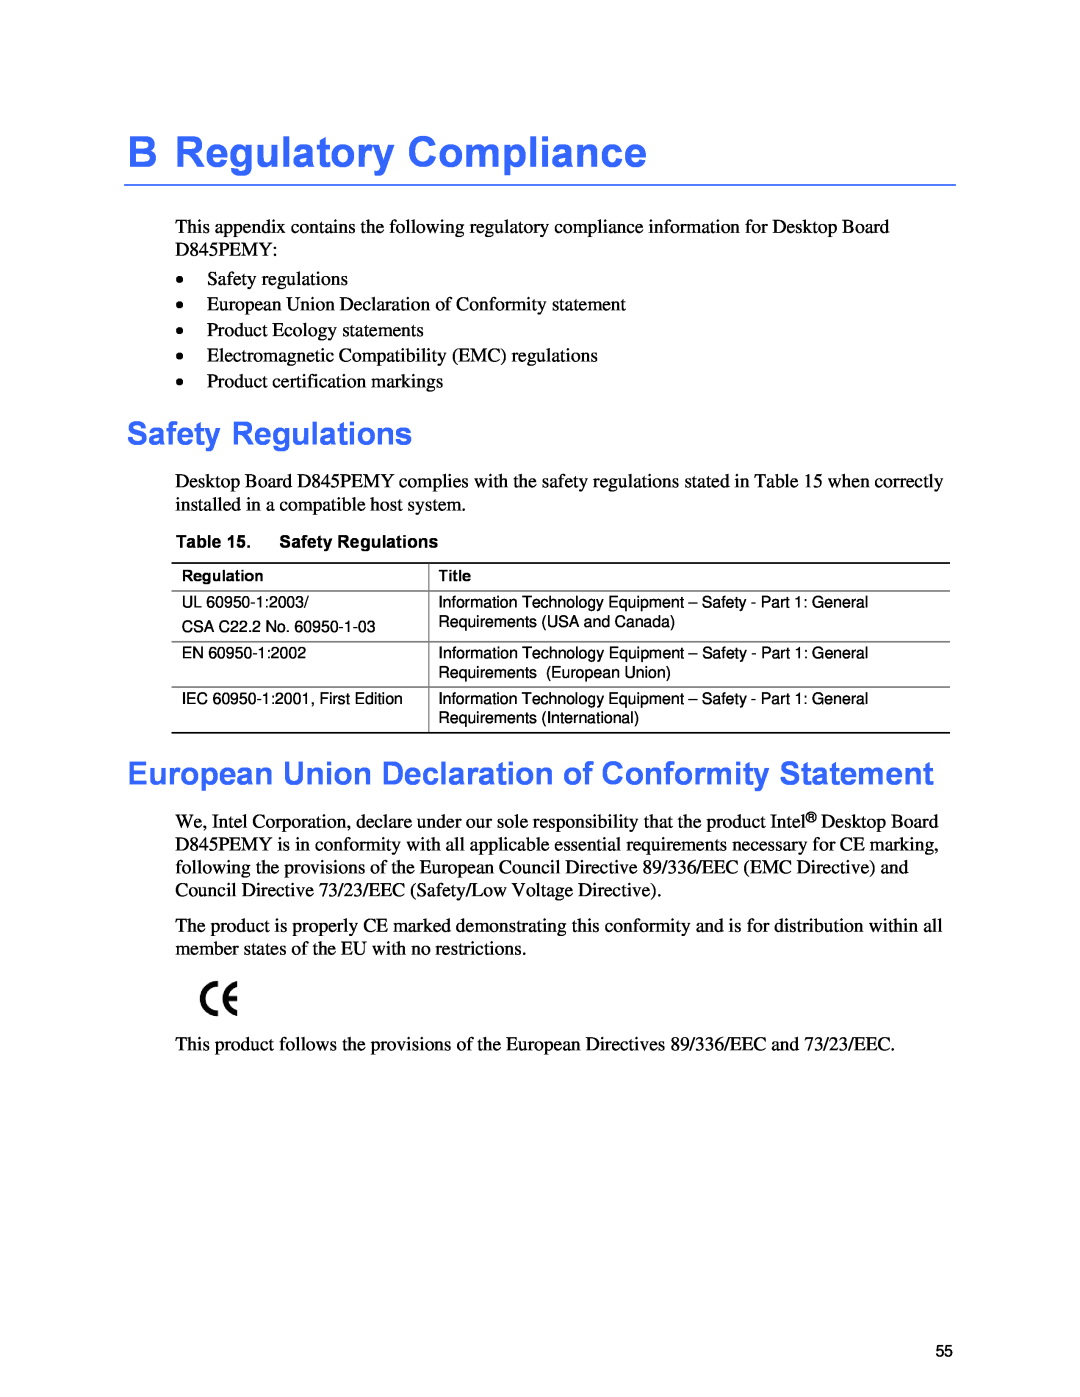 Intel D845PEMY manual B Regulatory Compliance, Safety Regulations, European Union Declaration of Conformity Statement 